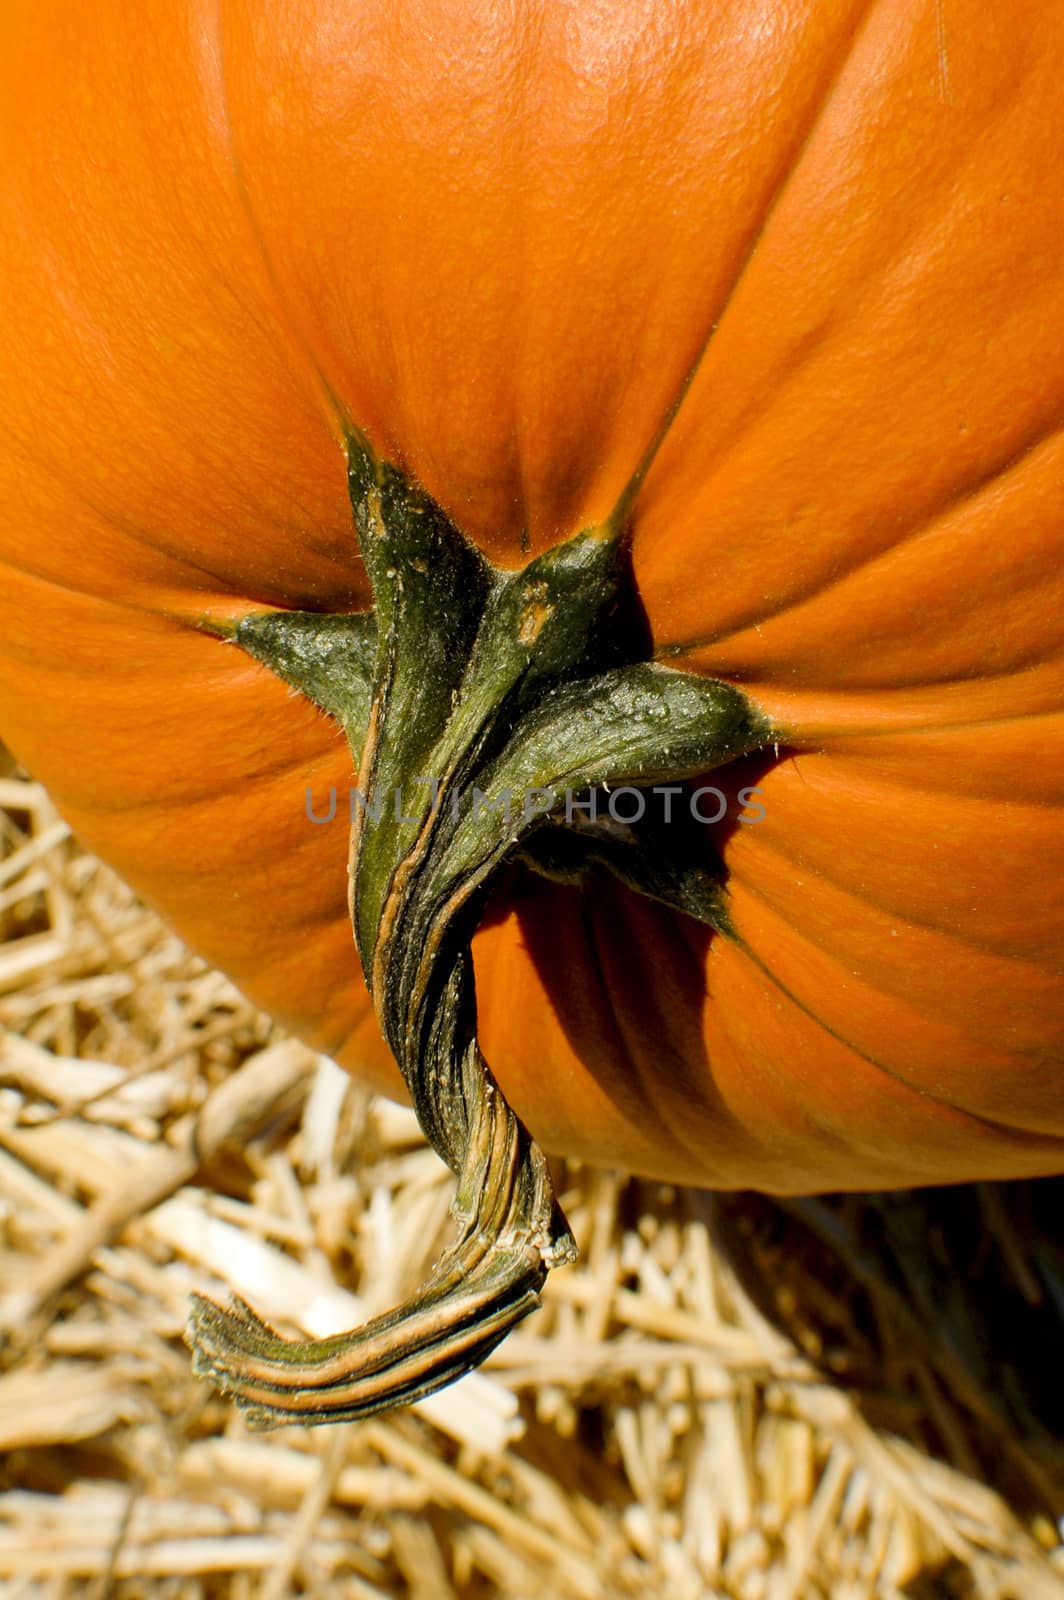 Pumpkin with stem by Njean